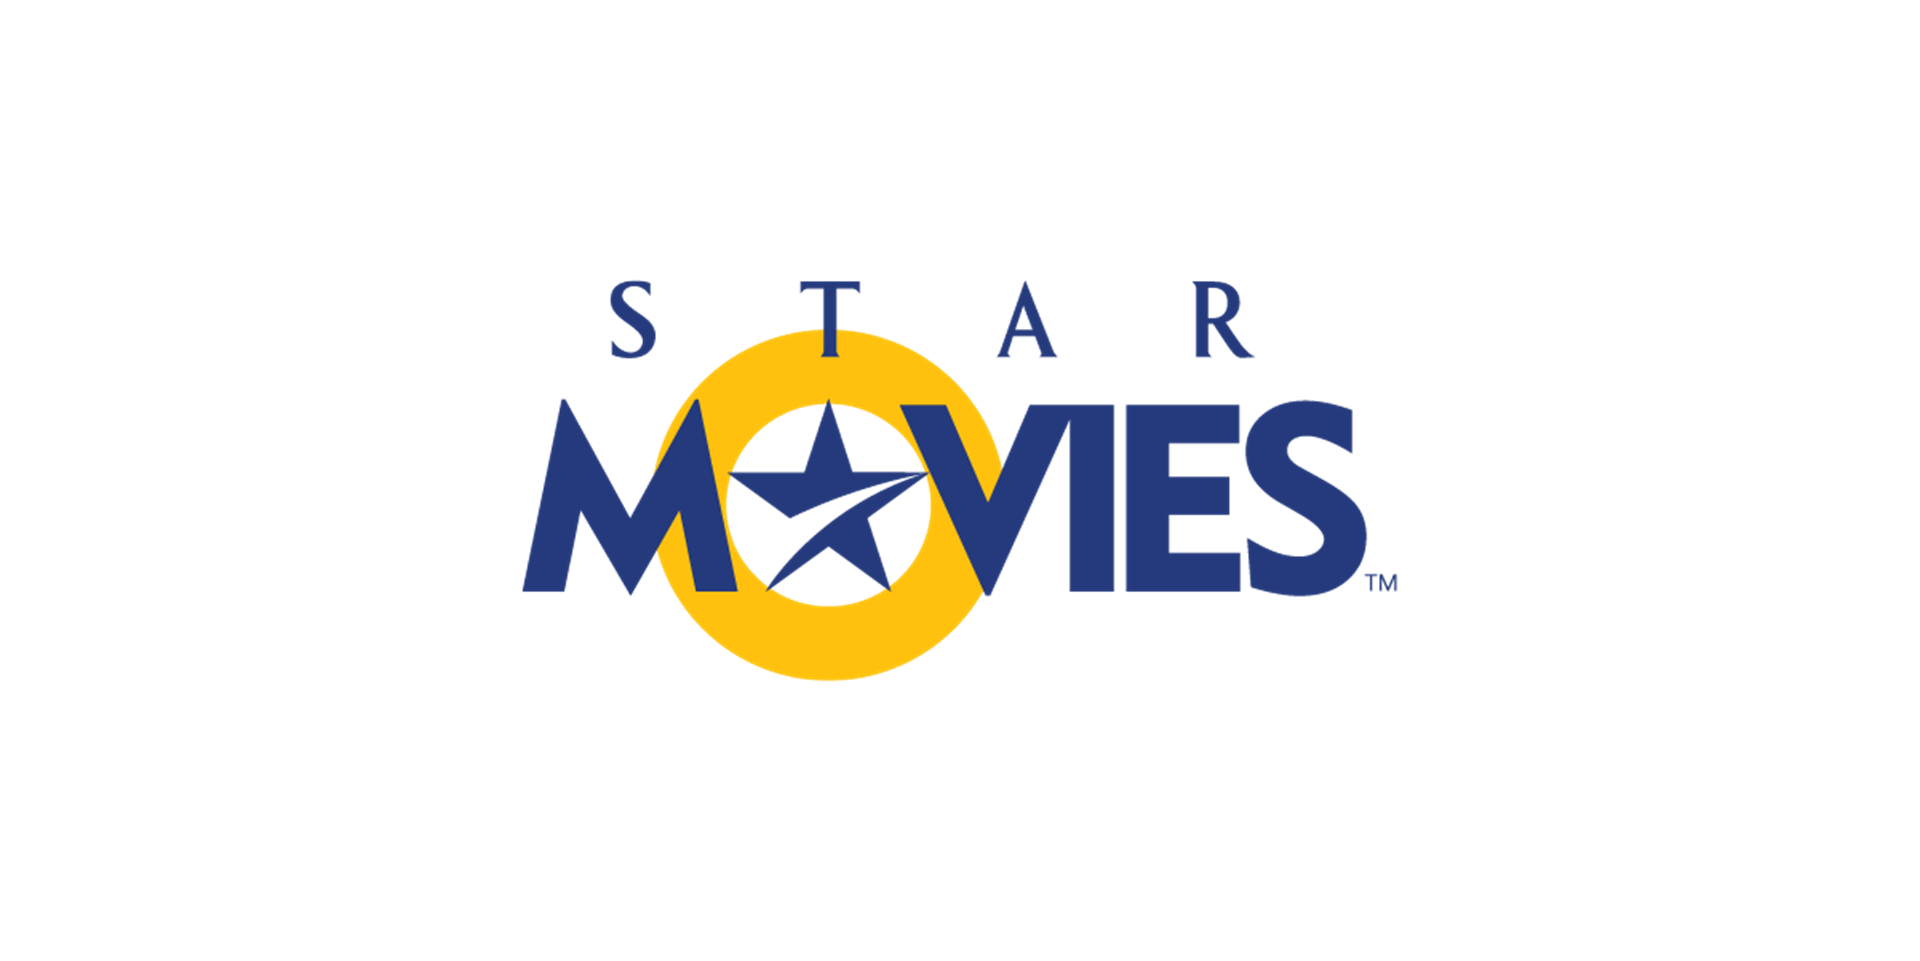 starmovies_logo_white_bg.png